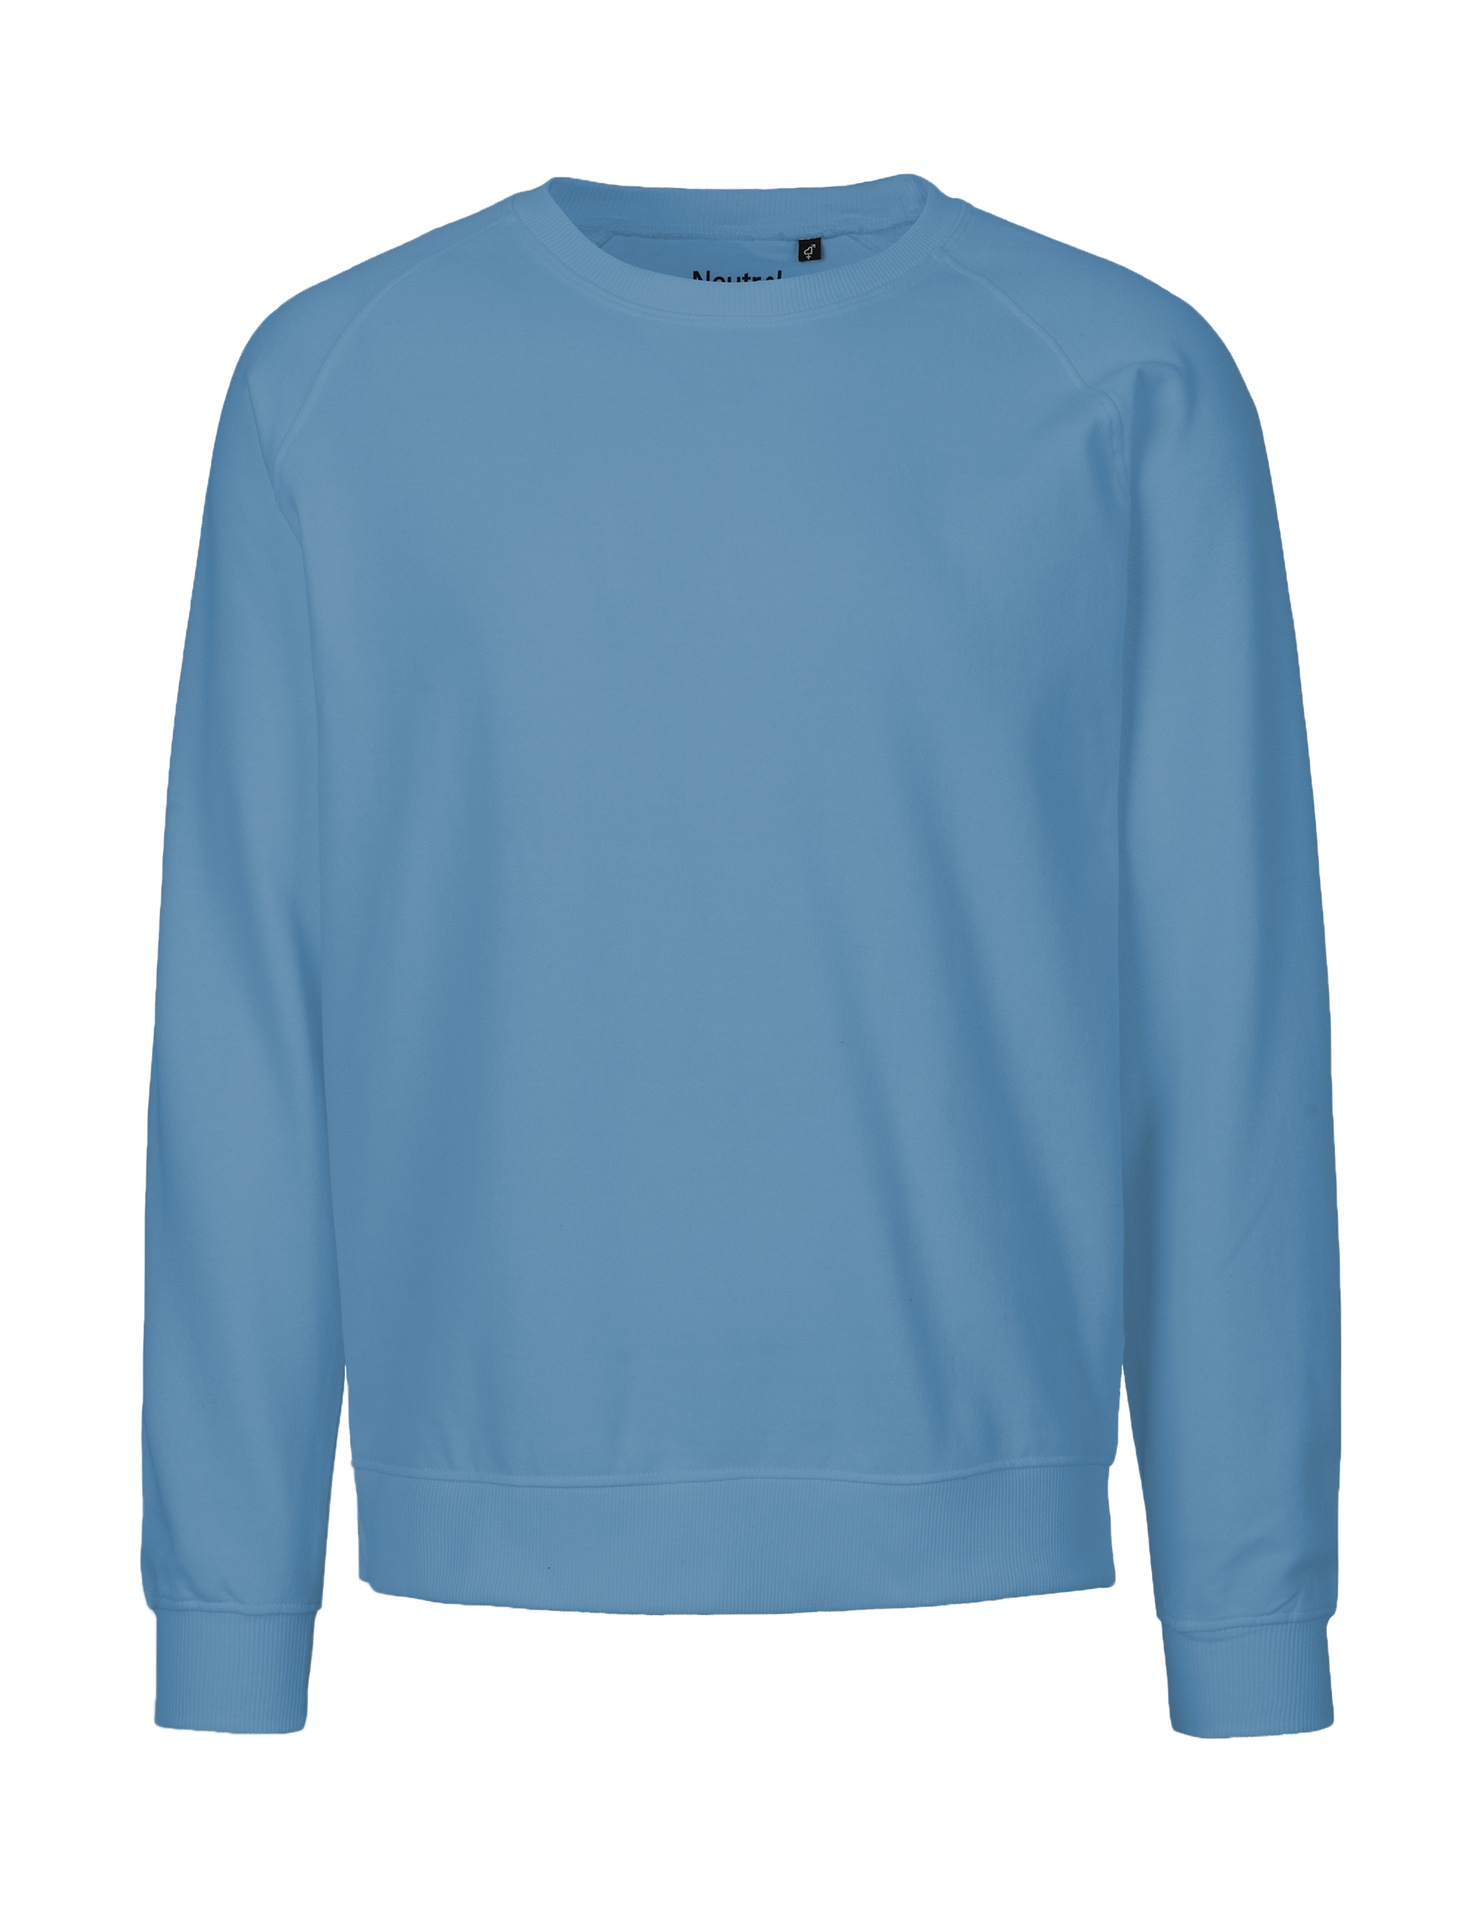 [PR/02840] Unisex Sweatshirt (Dusty Indigo 41, 5XL)